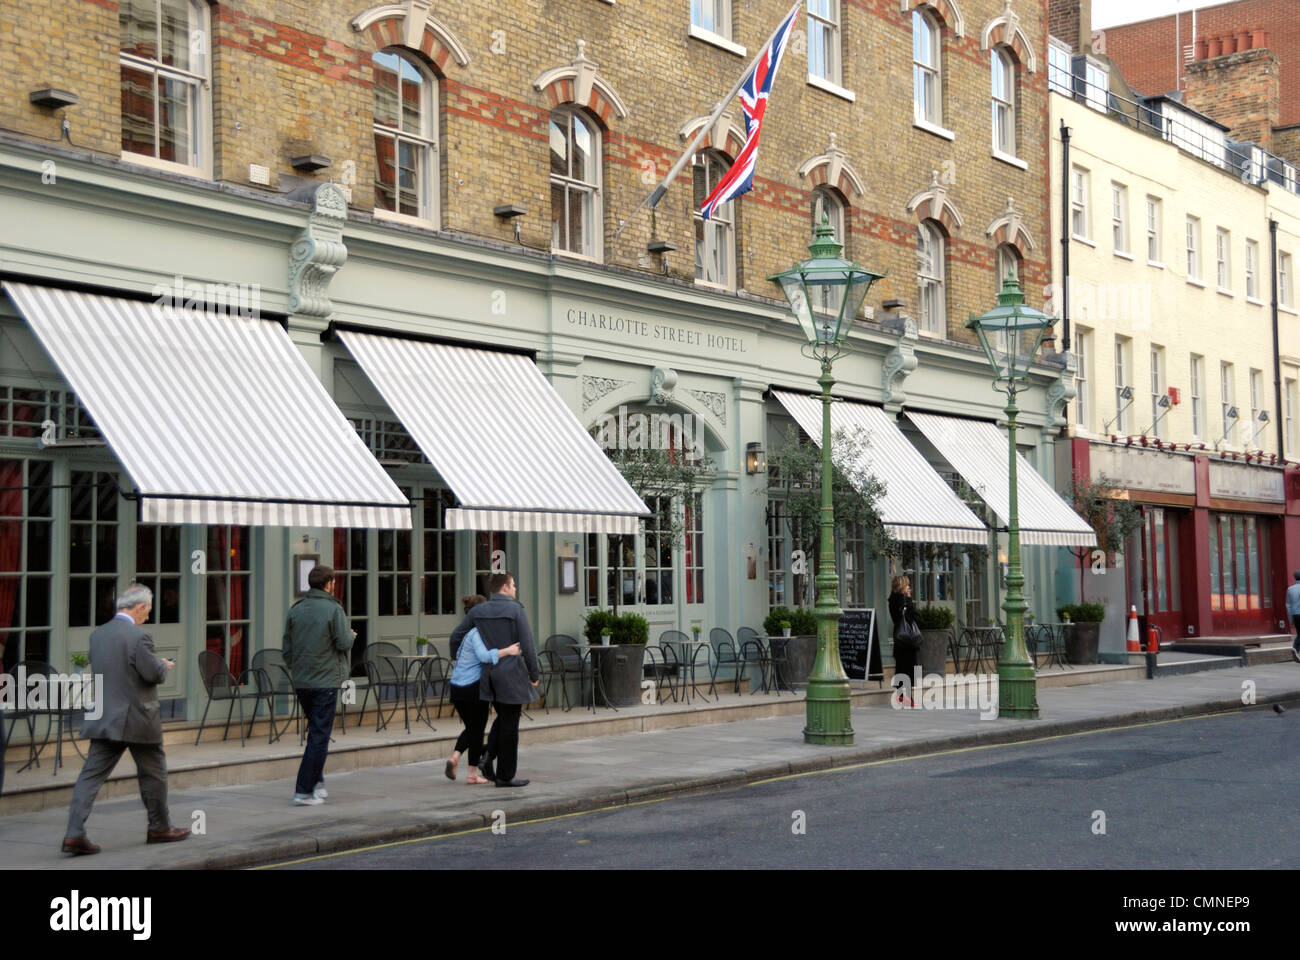 Charlotte Street Hotel, Fitzrovia, London, UK Stockfoto